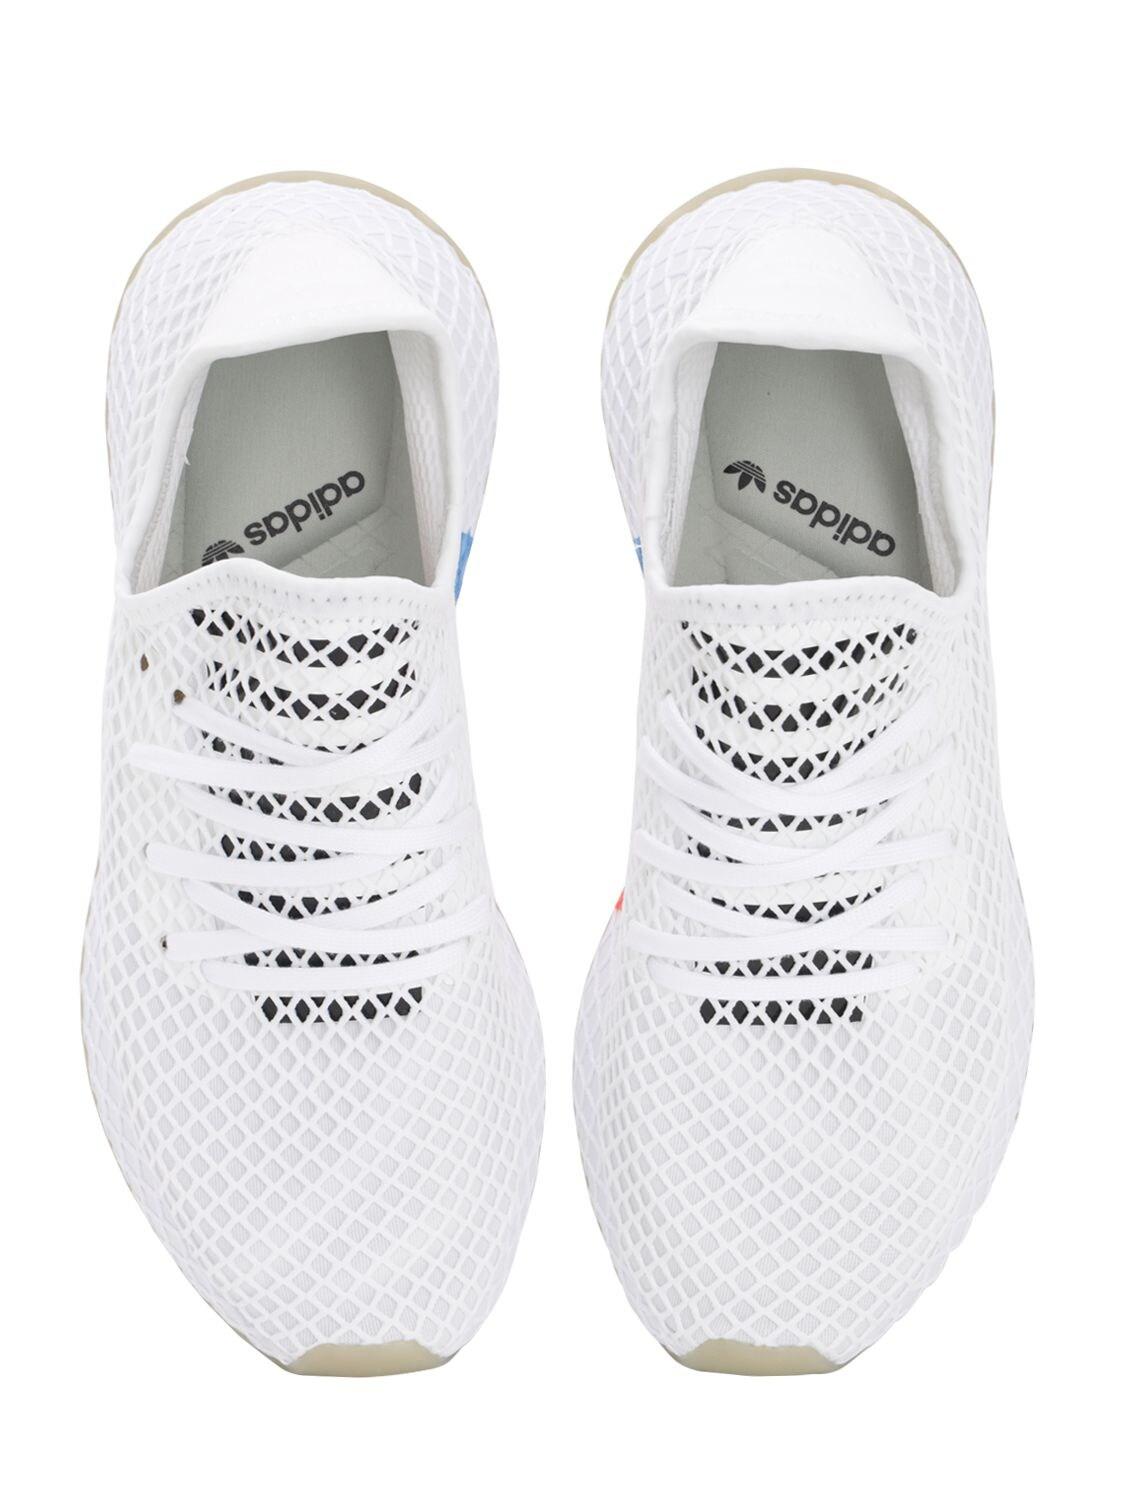 adidas Originals Deerupt Mesh Socks Sneakers in White | Lyst